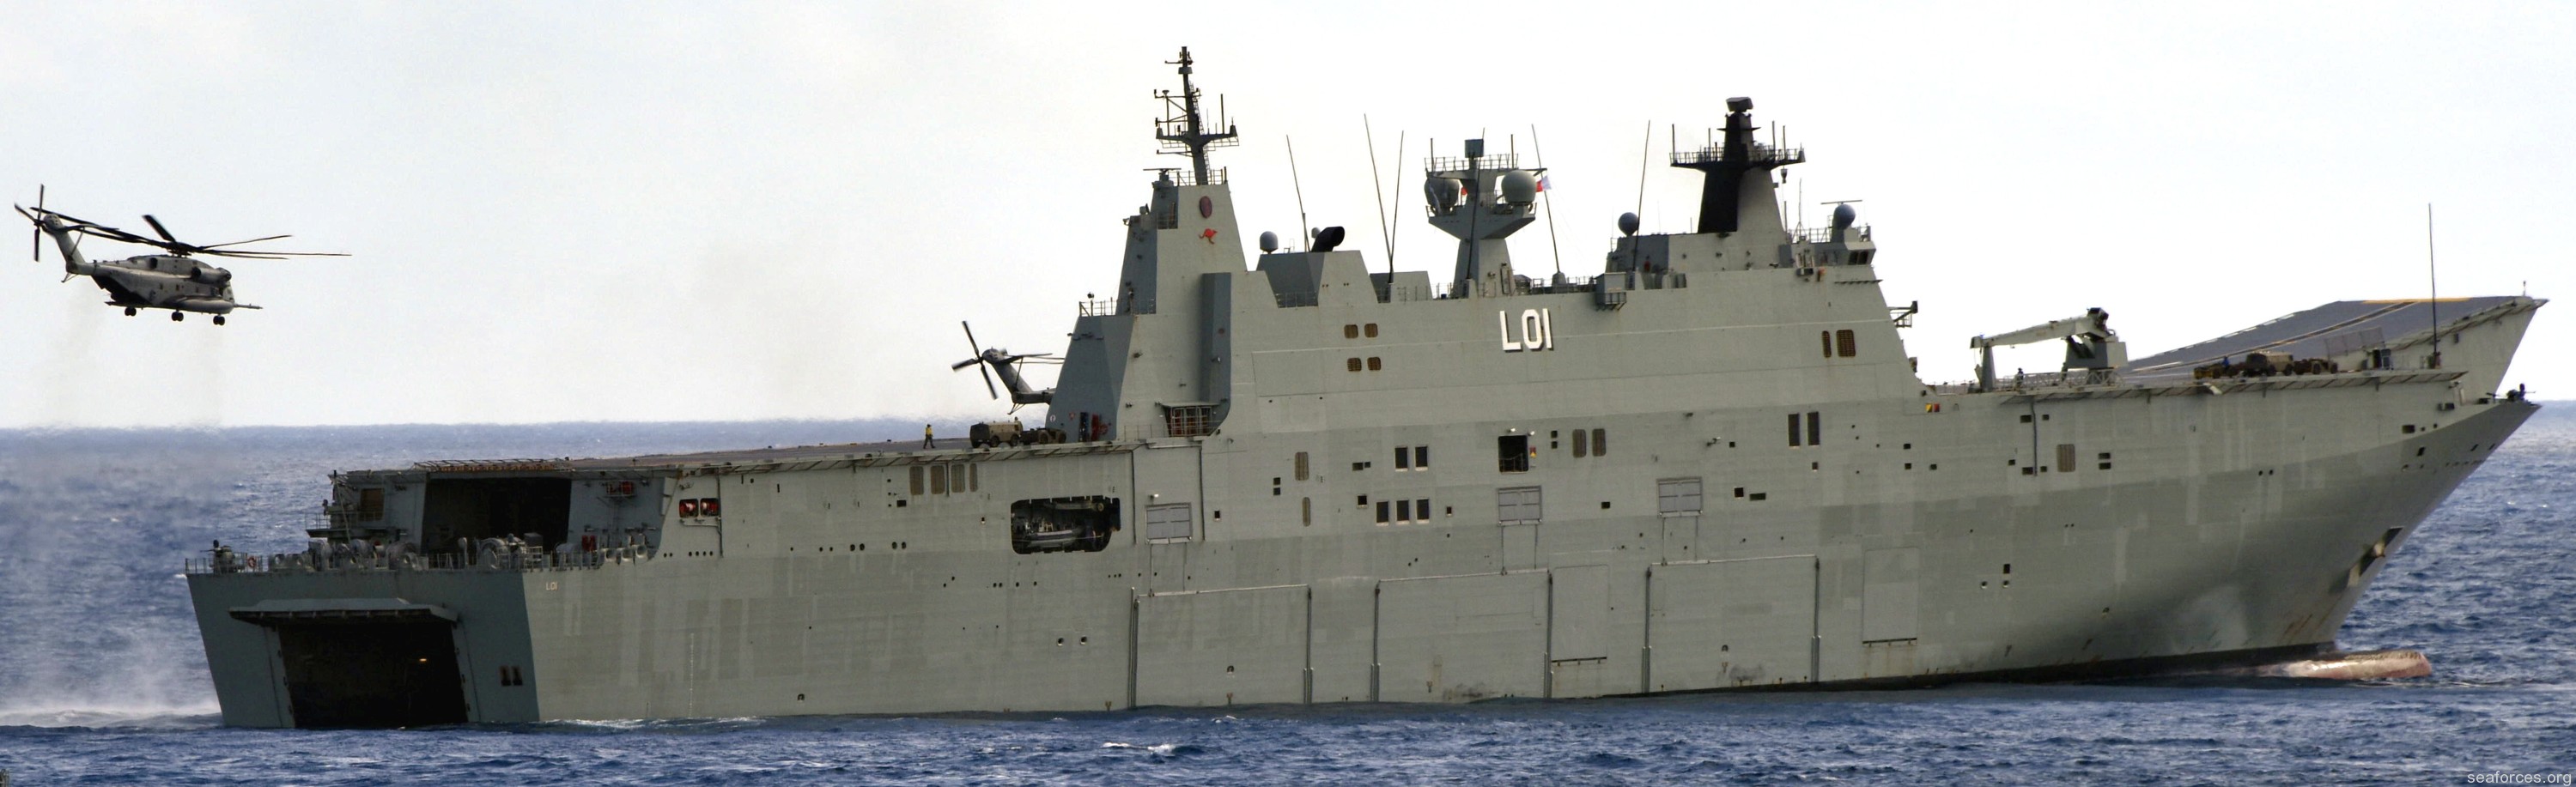 hmas adelaide l-01 amphibious landing ship helicopter dock lhd australian navy 04 exercise rimpac 2018